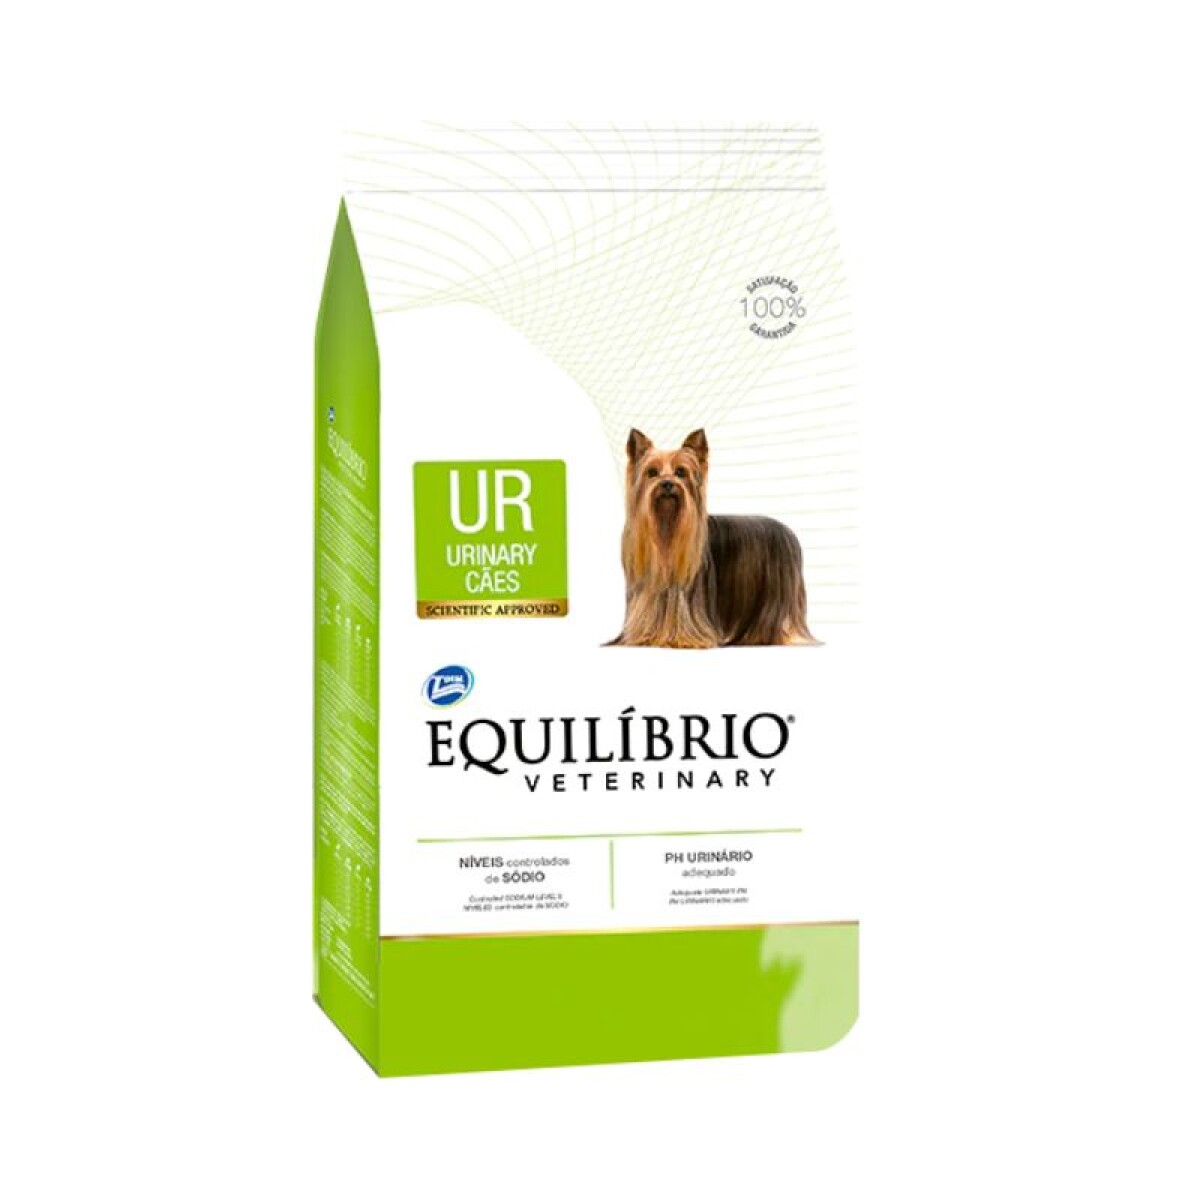 EQUILIBRIO URINARY DOG 2KG - Equilibrio Urinary Dog 2kg 